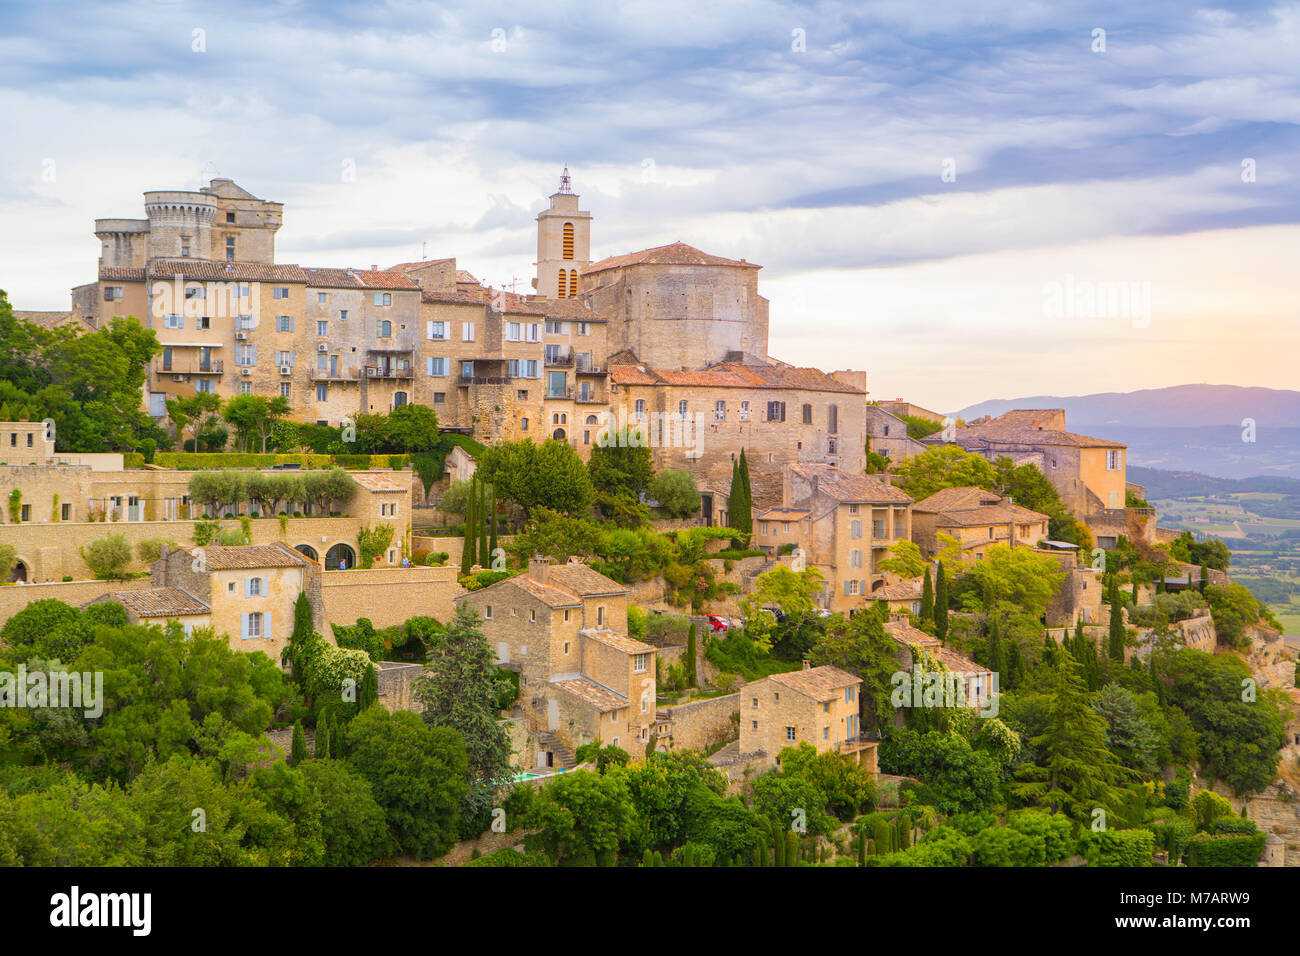 France, Provence region, Gordes City, Stock Photo